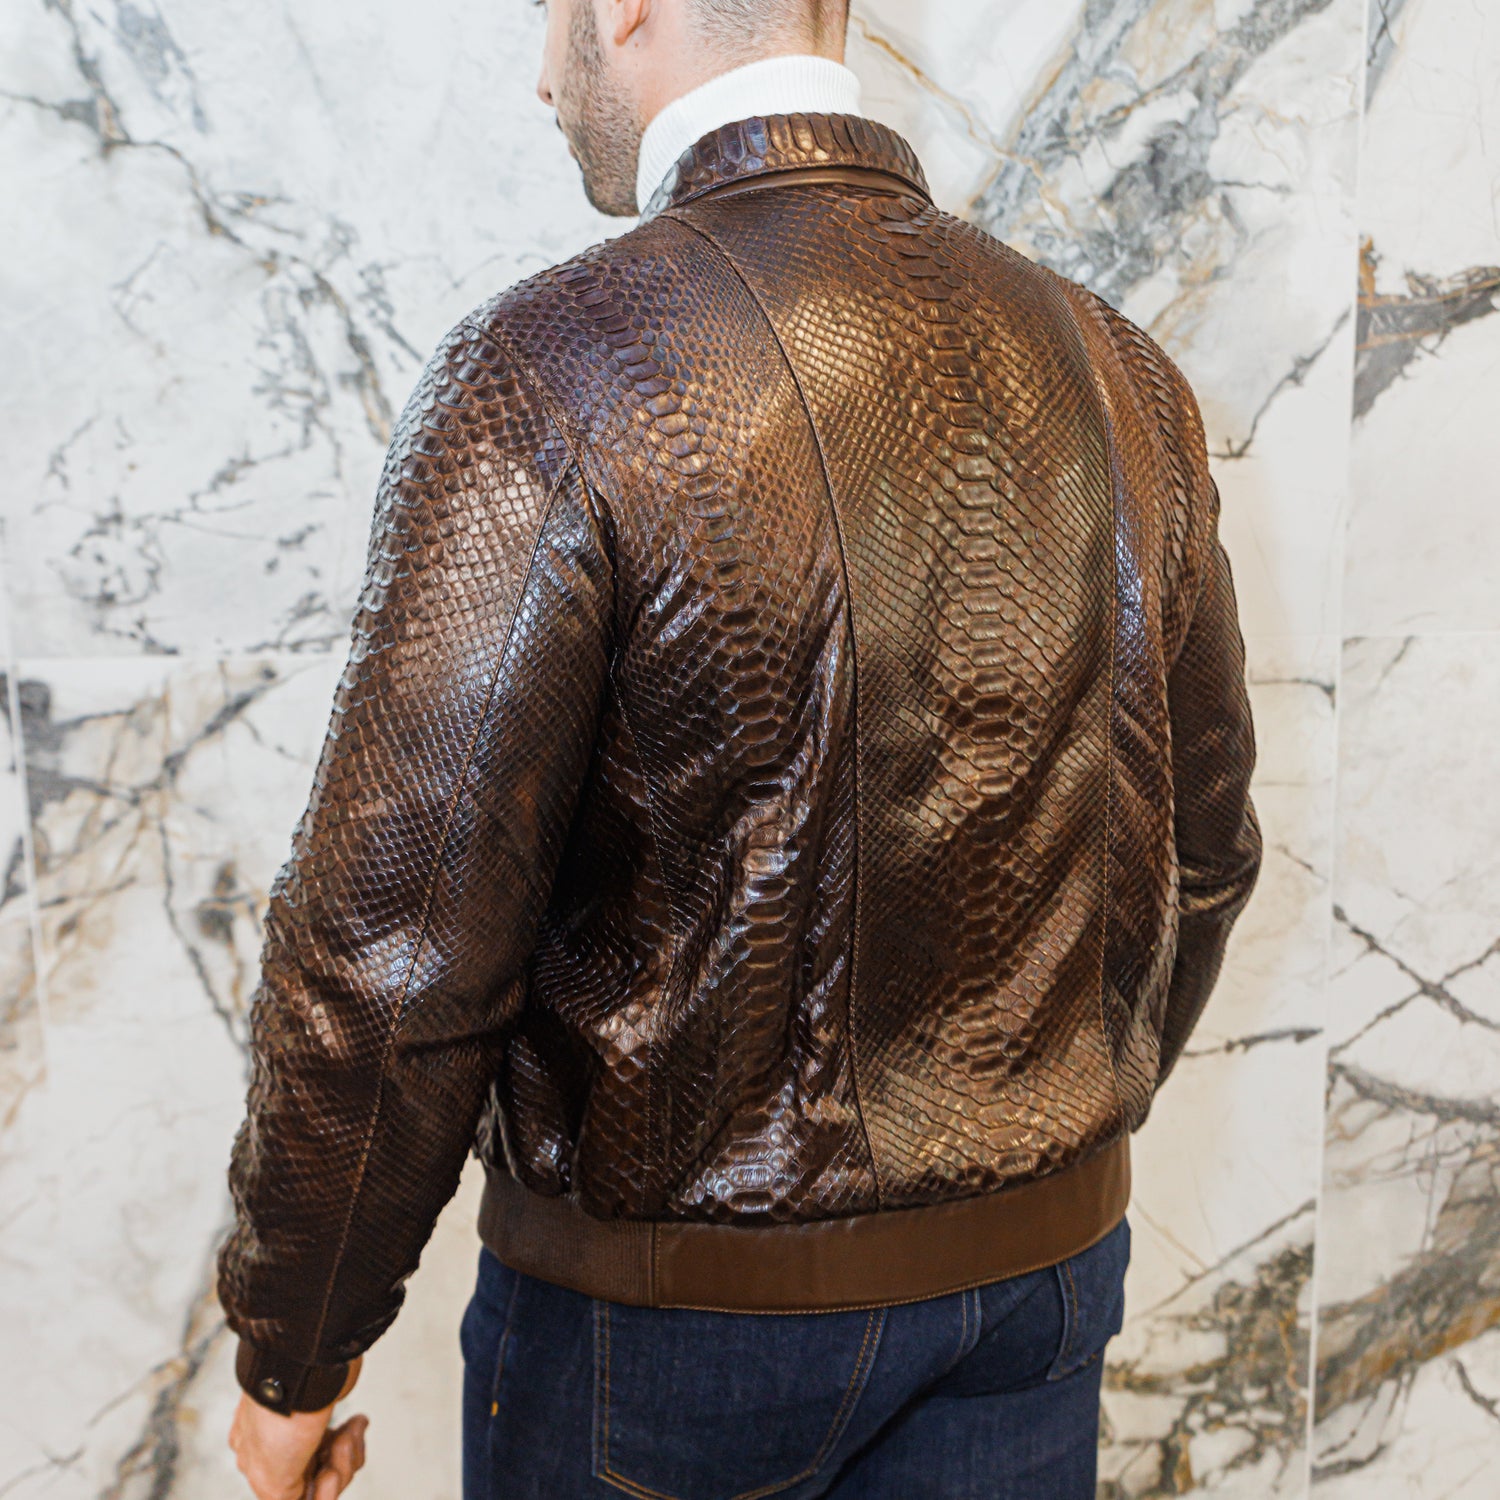 Python Leather Jacket - Brown - Leather Jacket by Urbbana